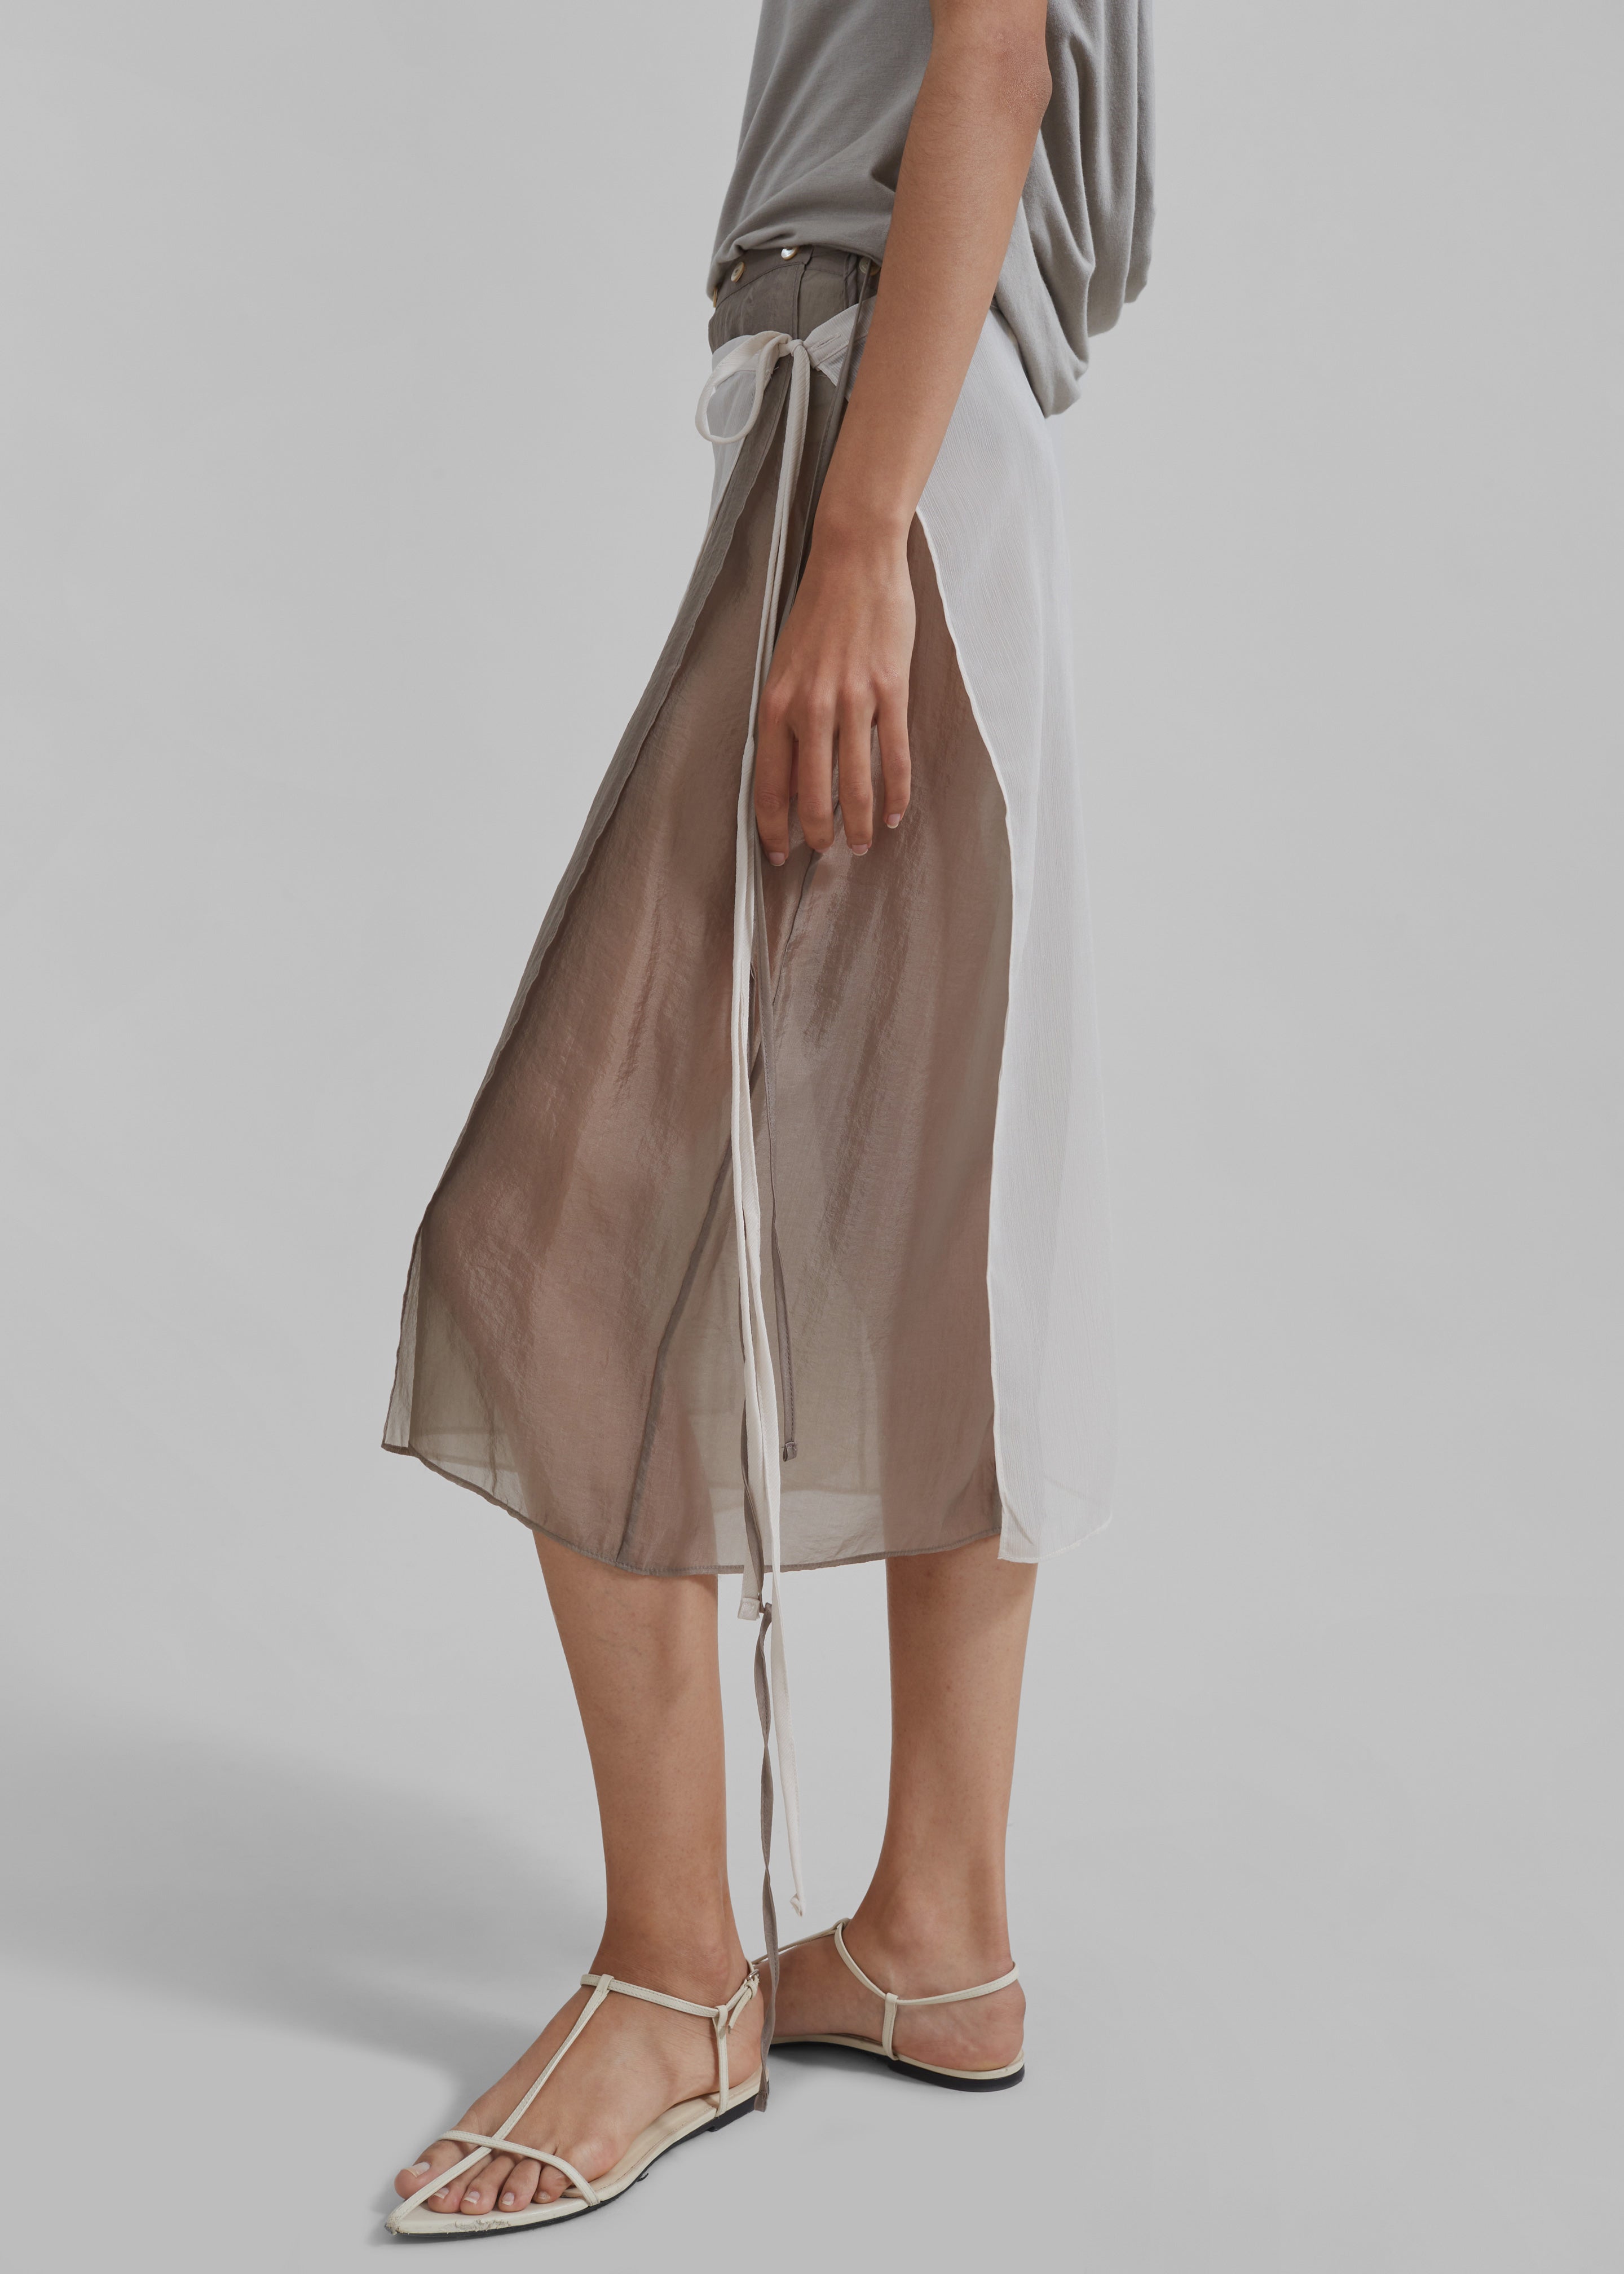 Tia Sheer Layered Skirt - Beige - 5